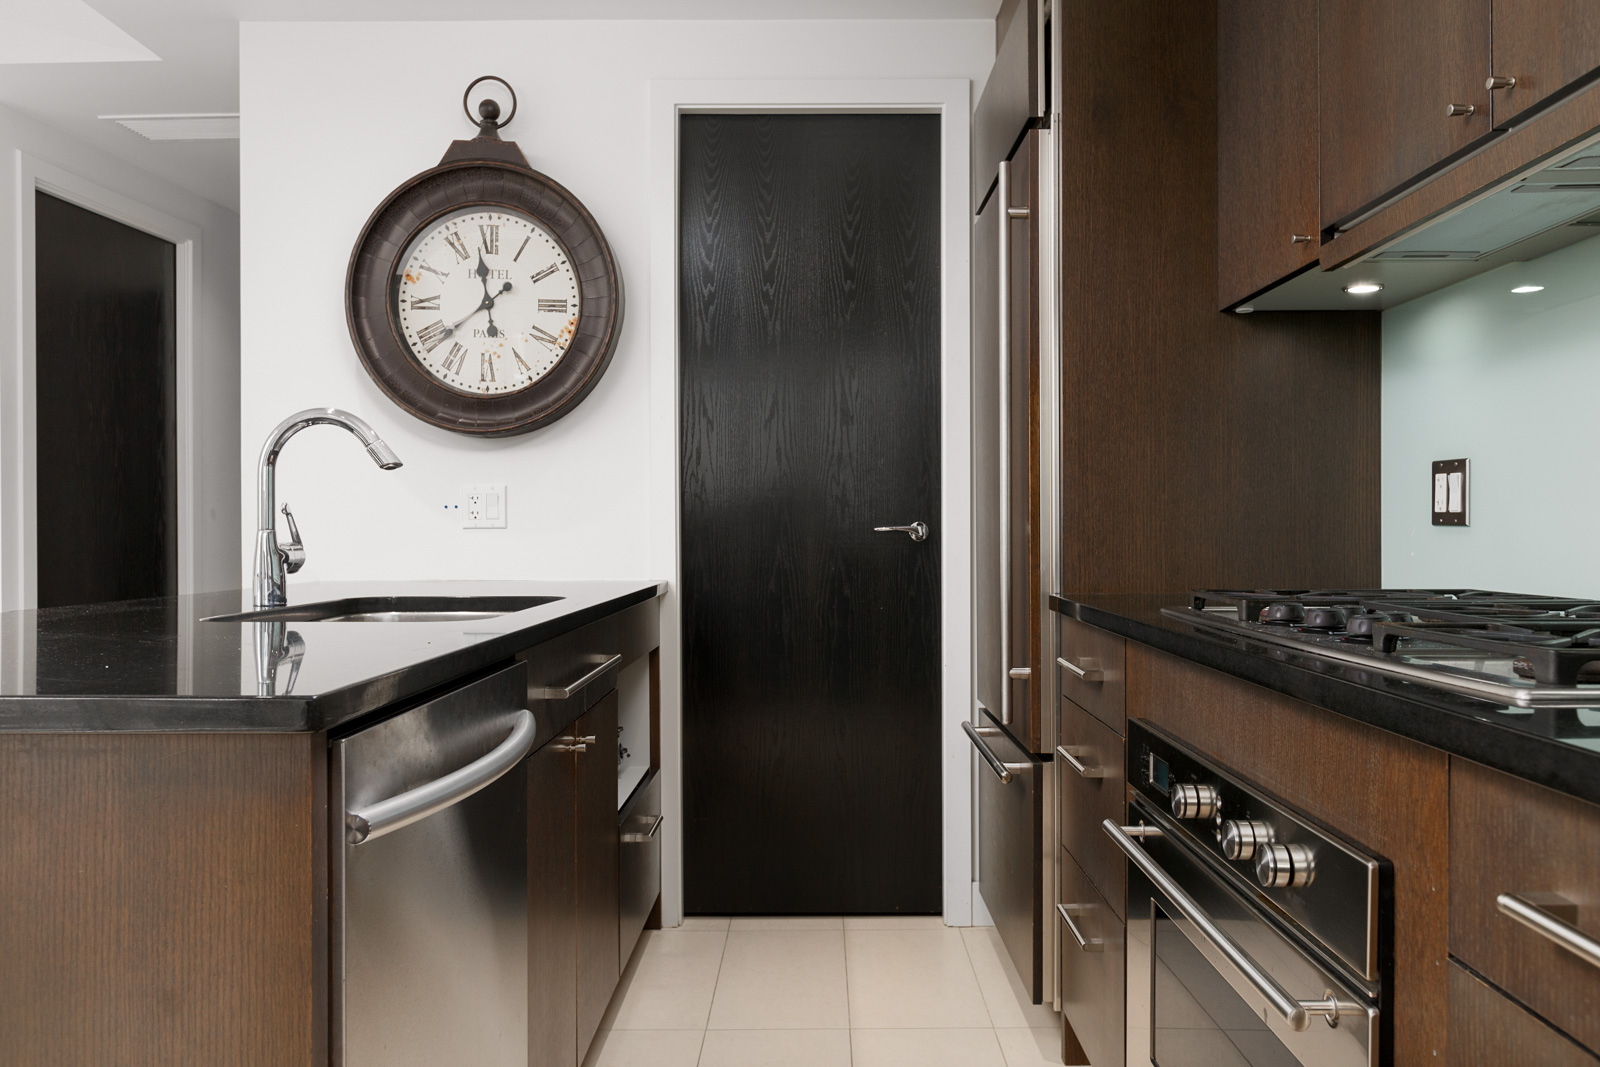 Condo kitchen with clock dishwasher stove and dark door